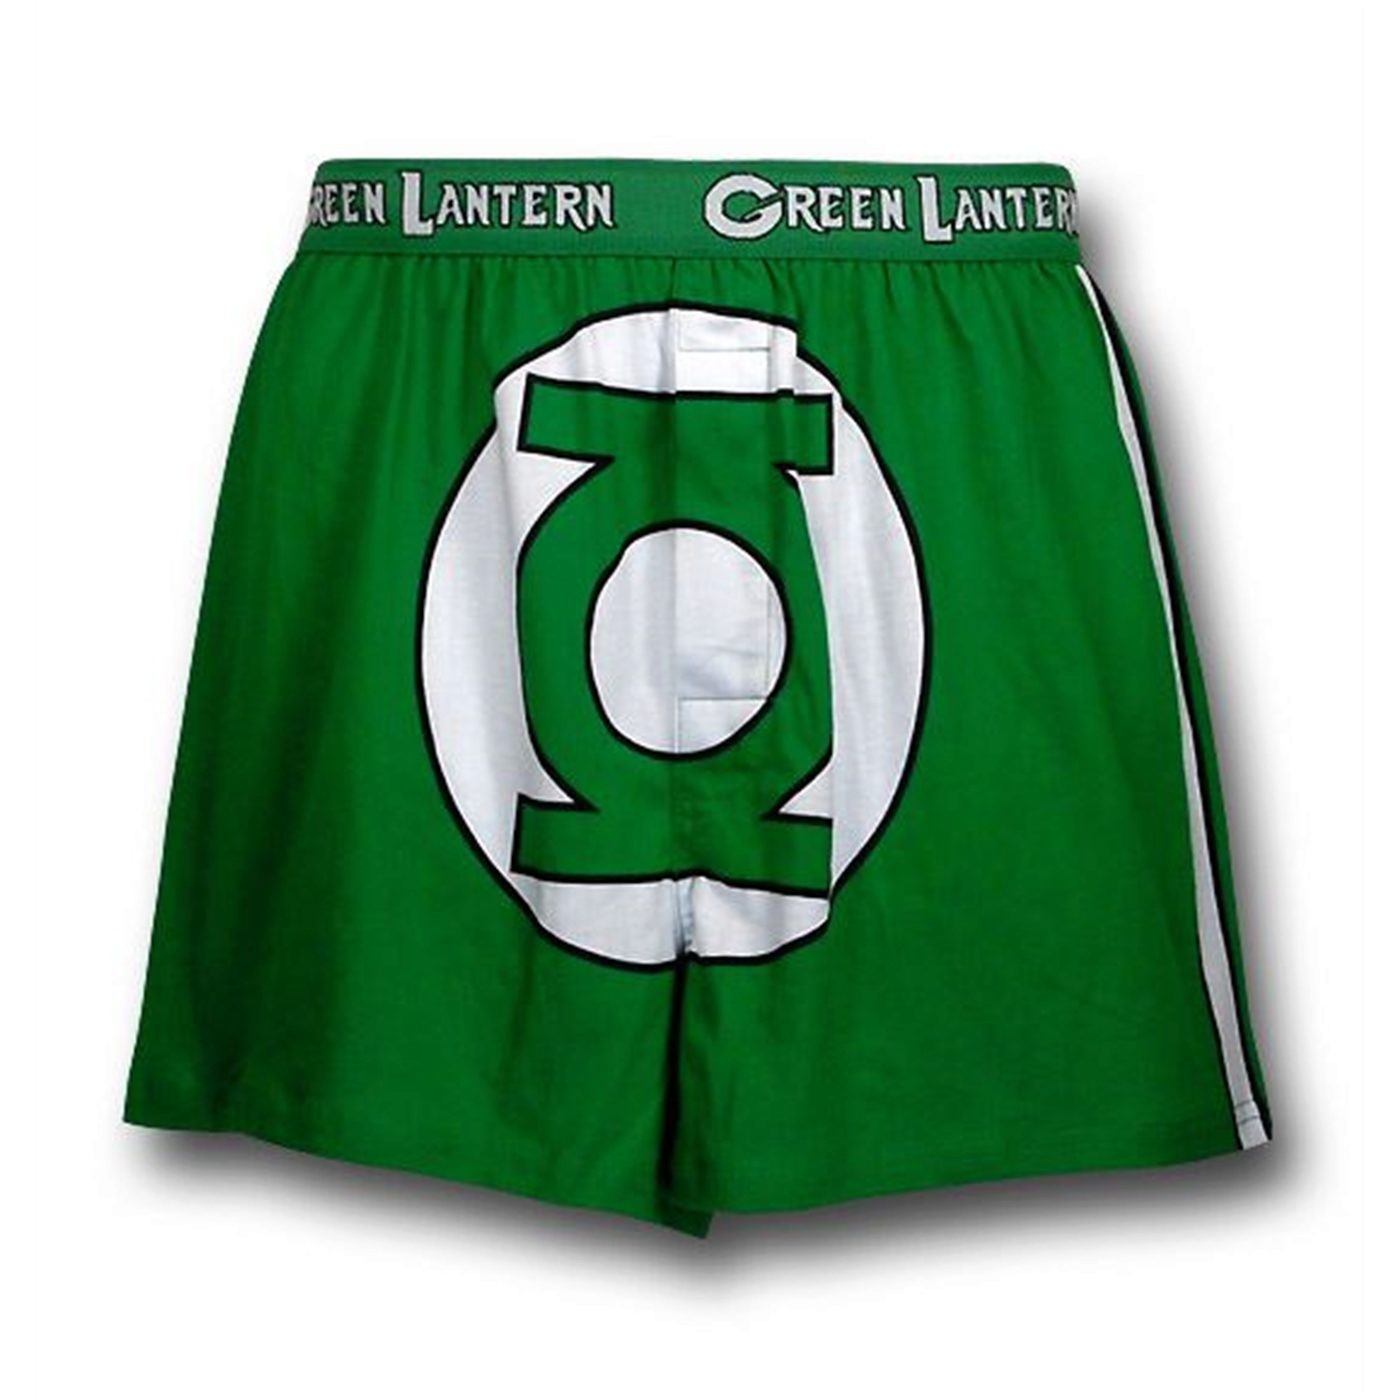 Green Lantern Boxer Shorts